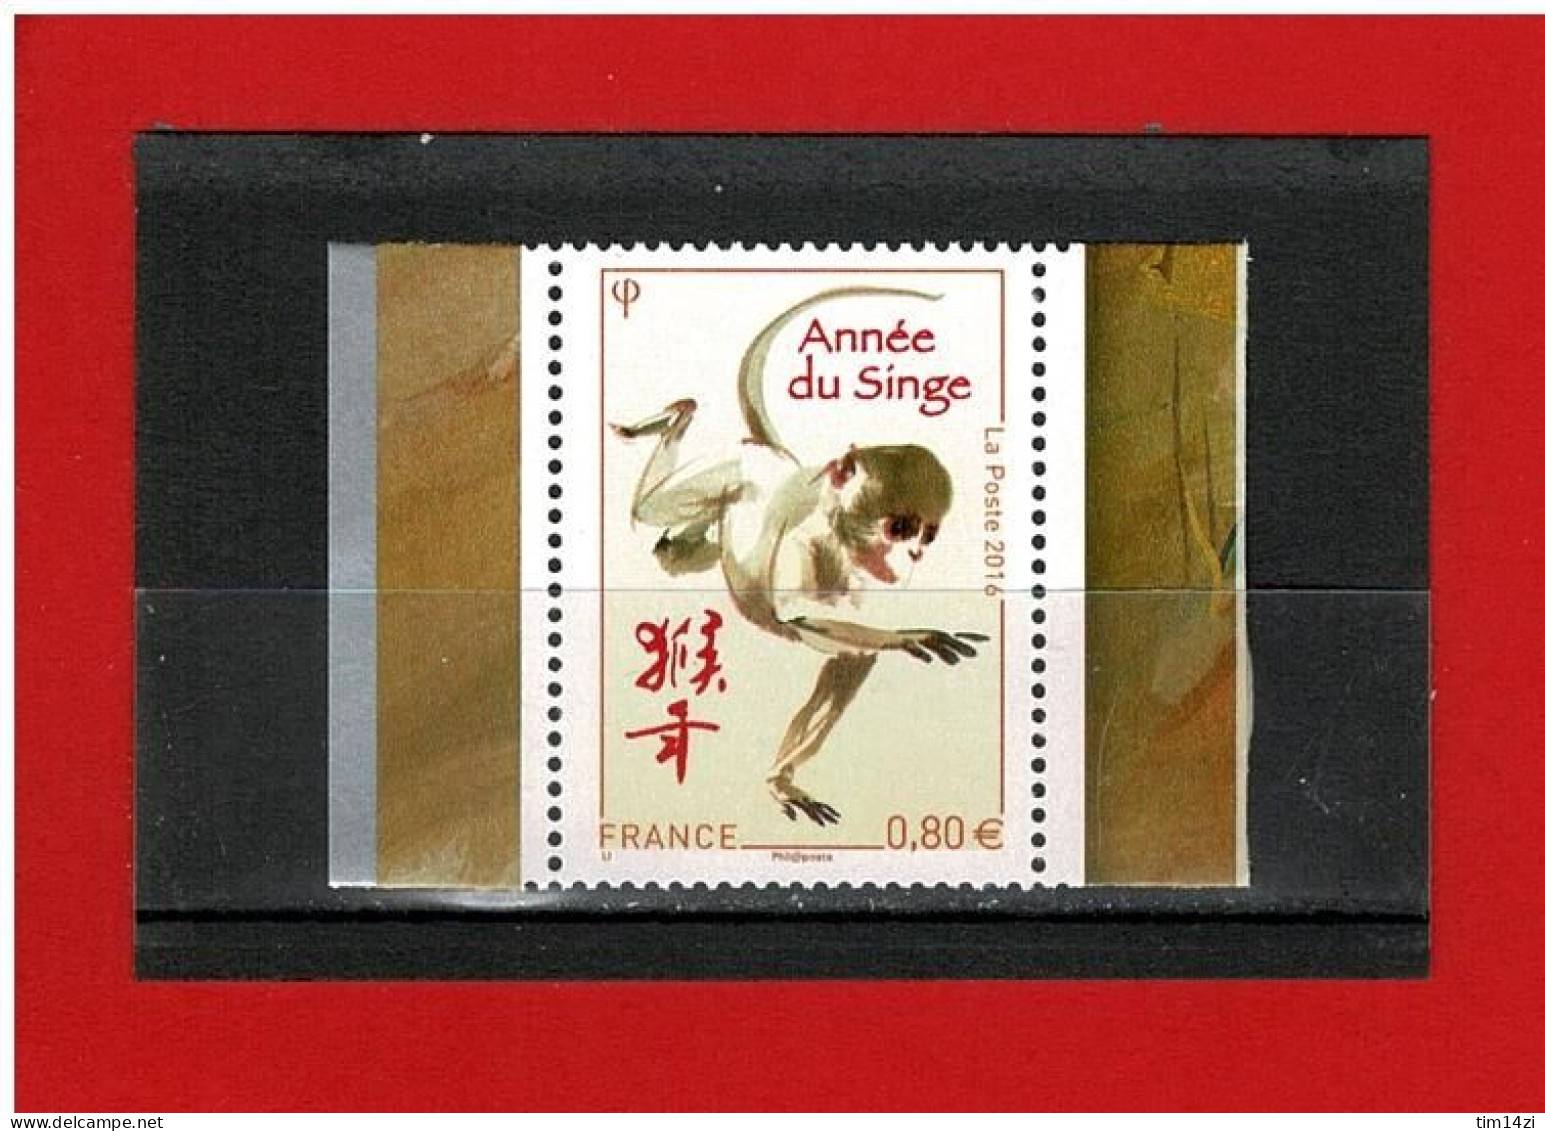 2016 - ANNEE LUNAIRE CHINOISE DU SINGE - N°5031 - NEUF** - COTE Y & T : 2.50 Euros - Nuevos